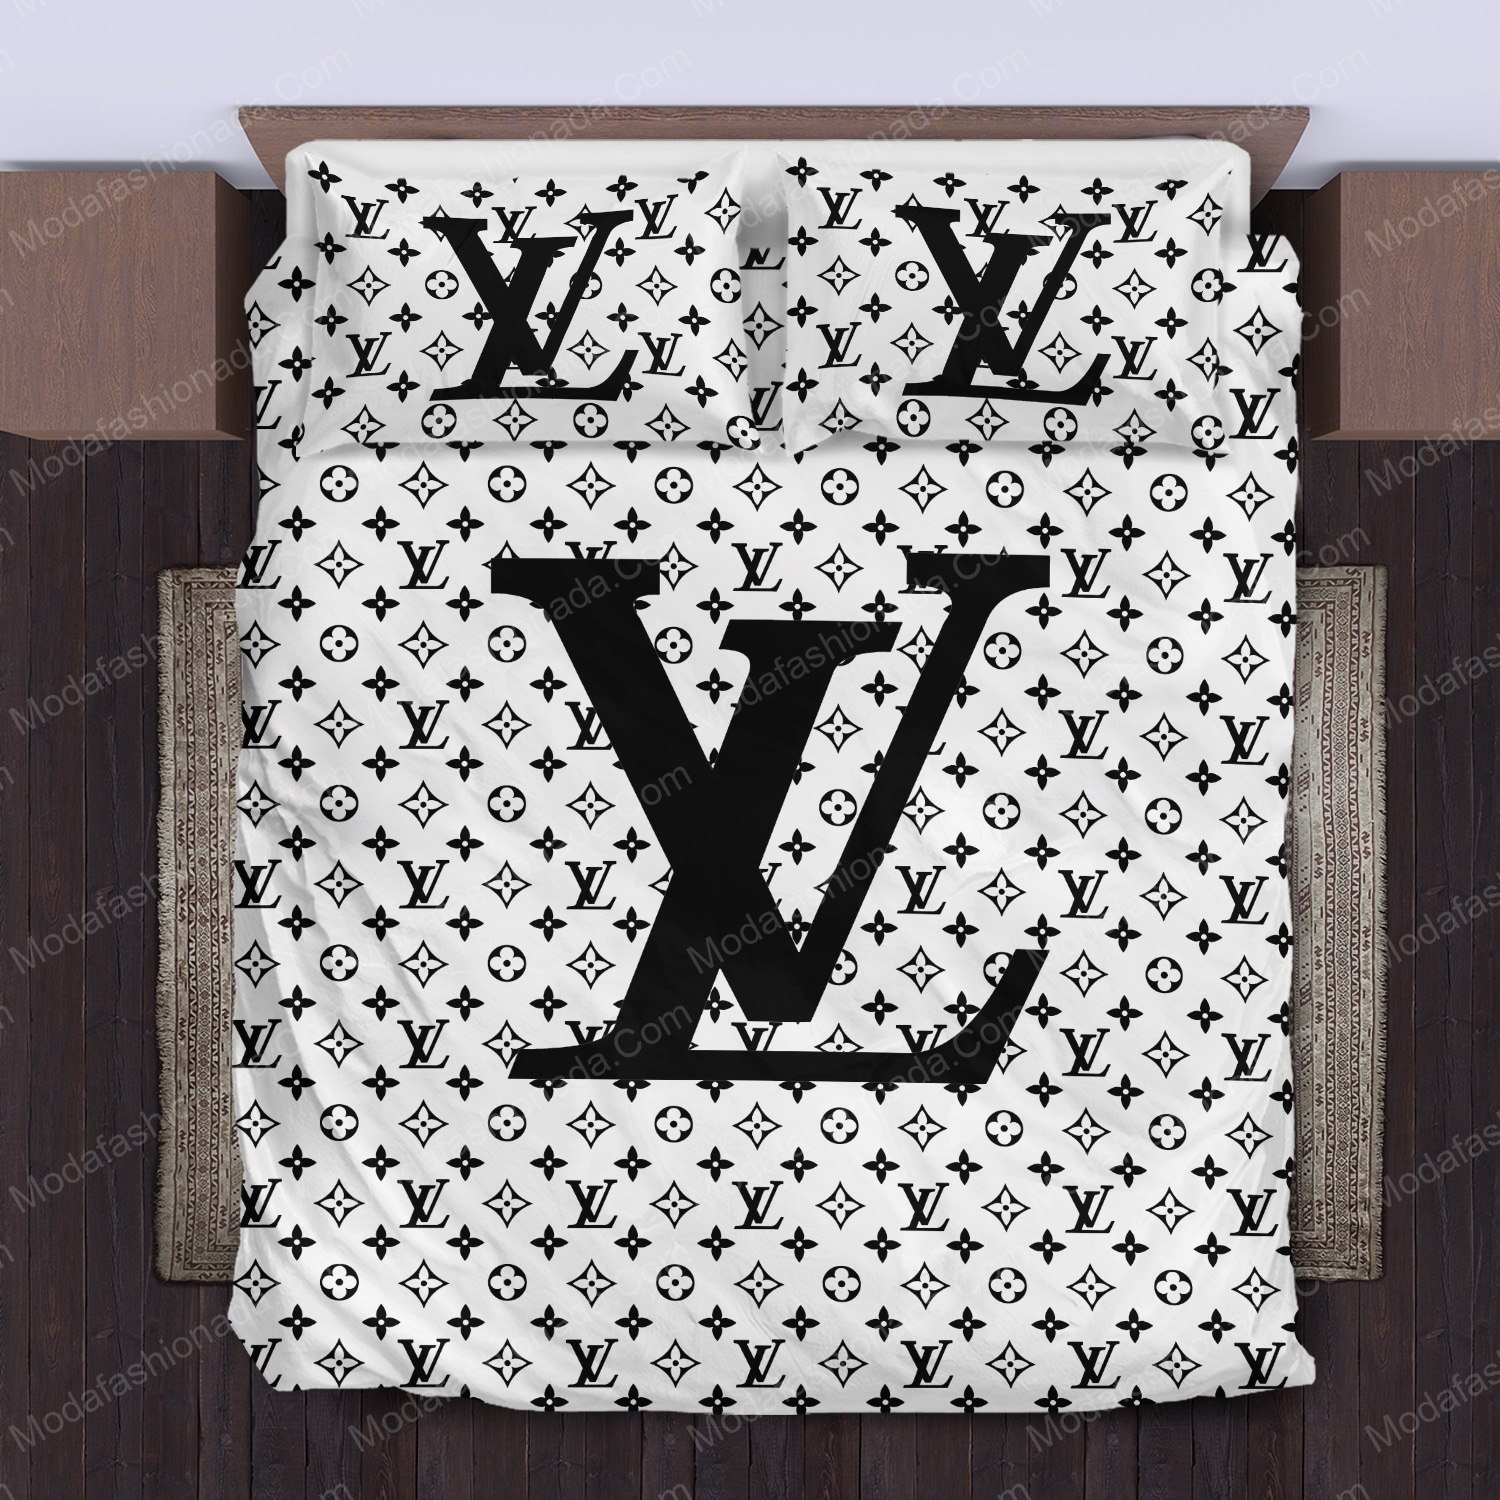 Buy Louis Vuitton Luxury Brands 27 Bedding Set Bed Sets